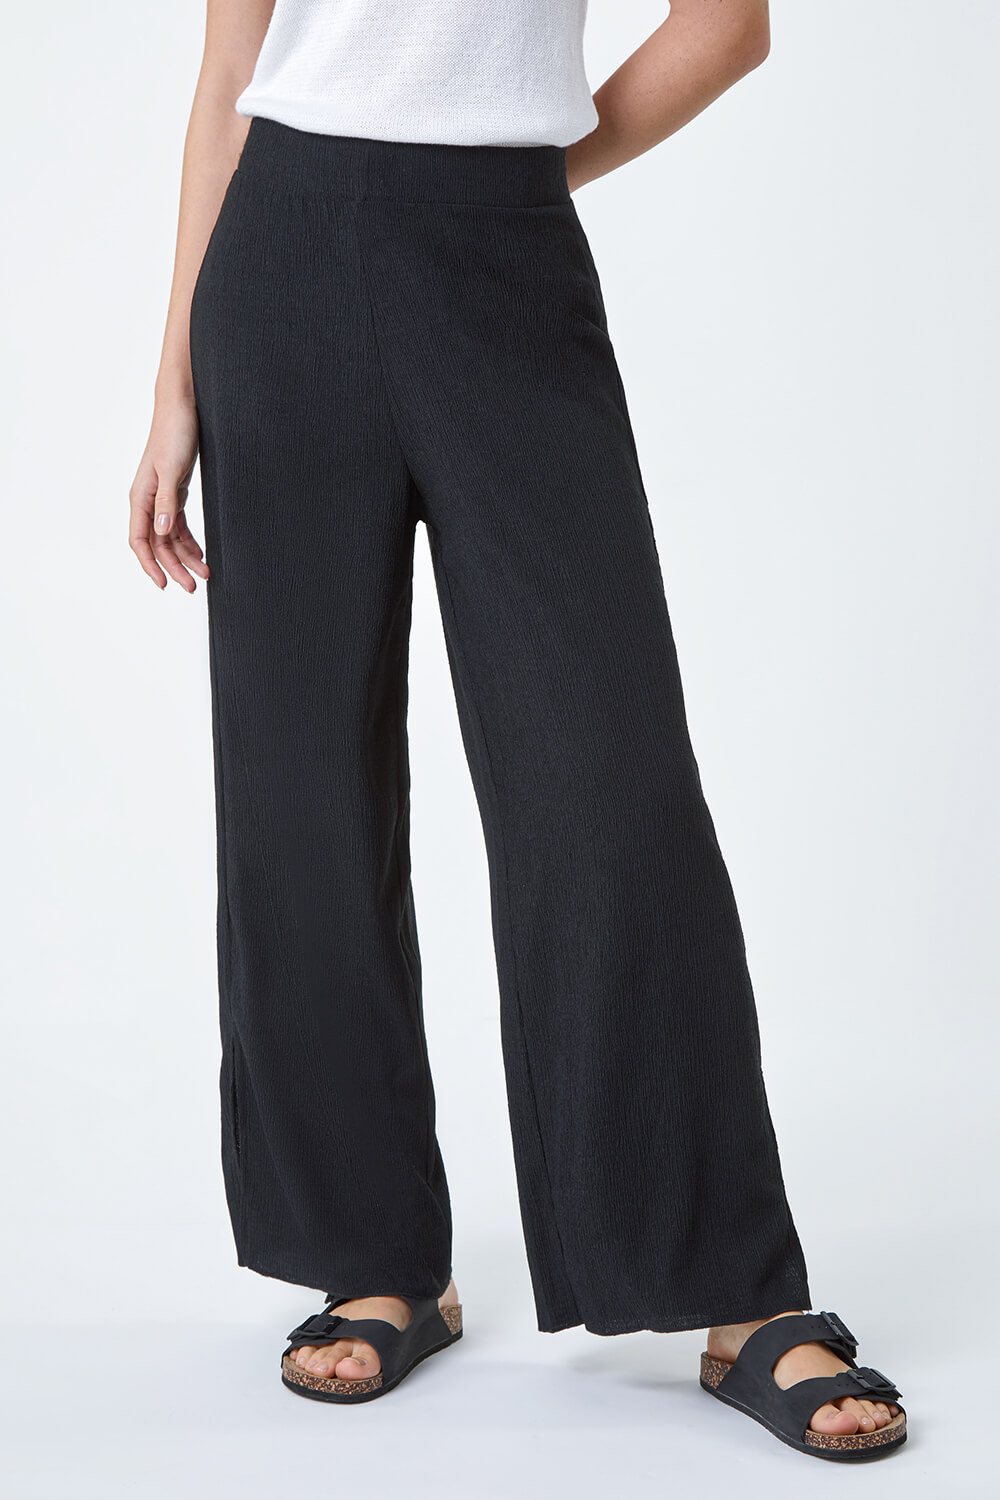 Black Crinkle Side Split Stretch Trousers, Image 4 of 5